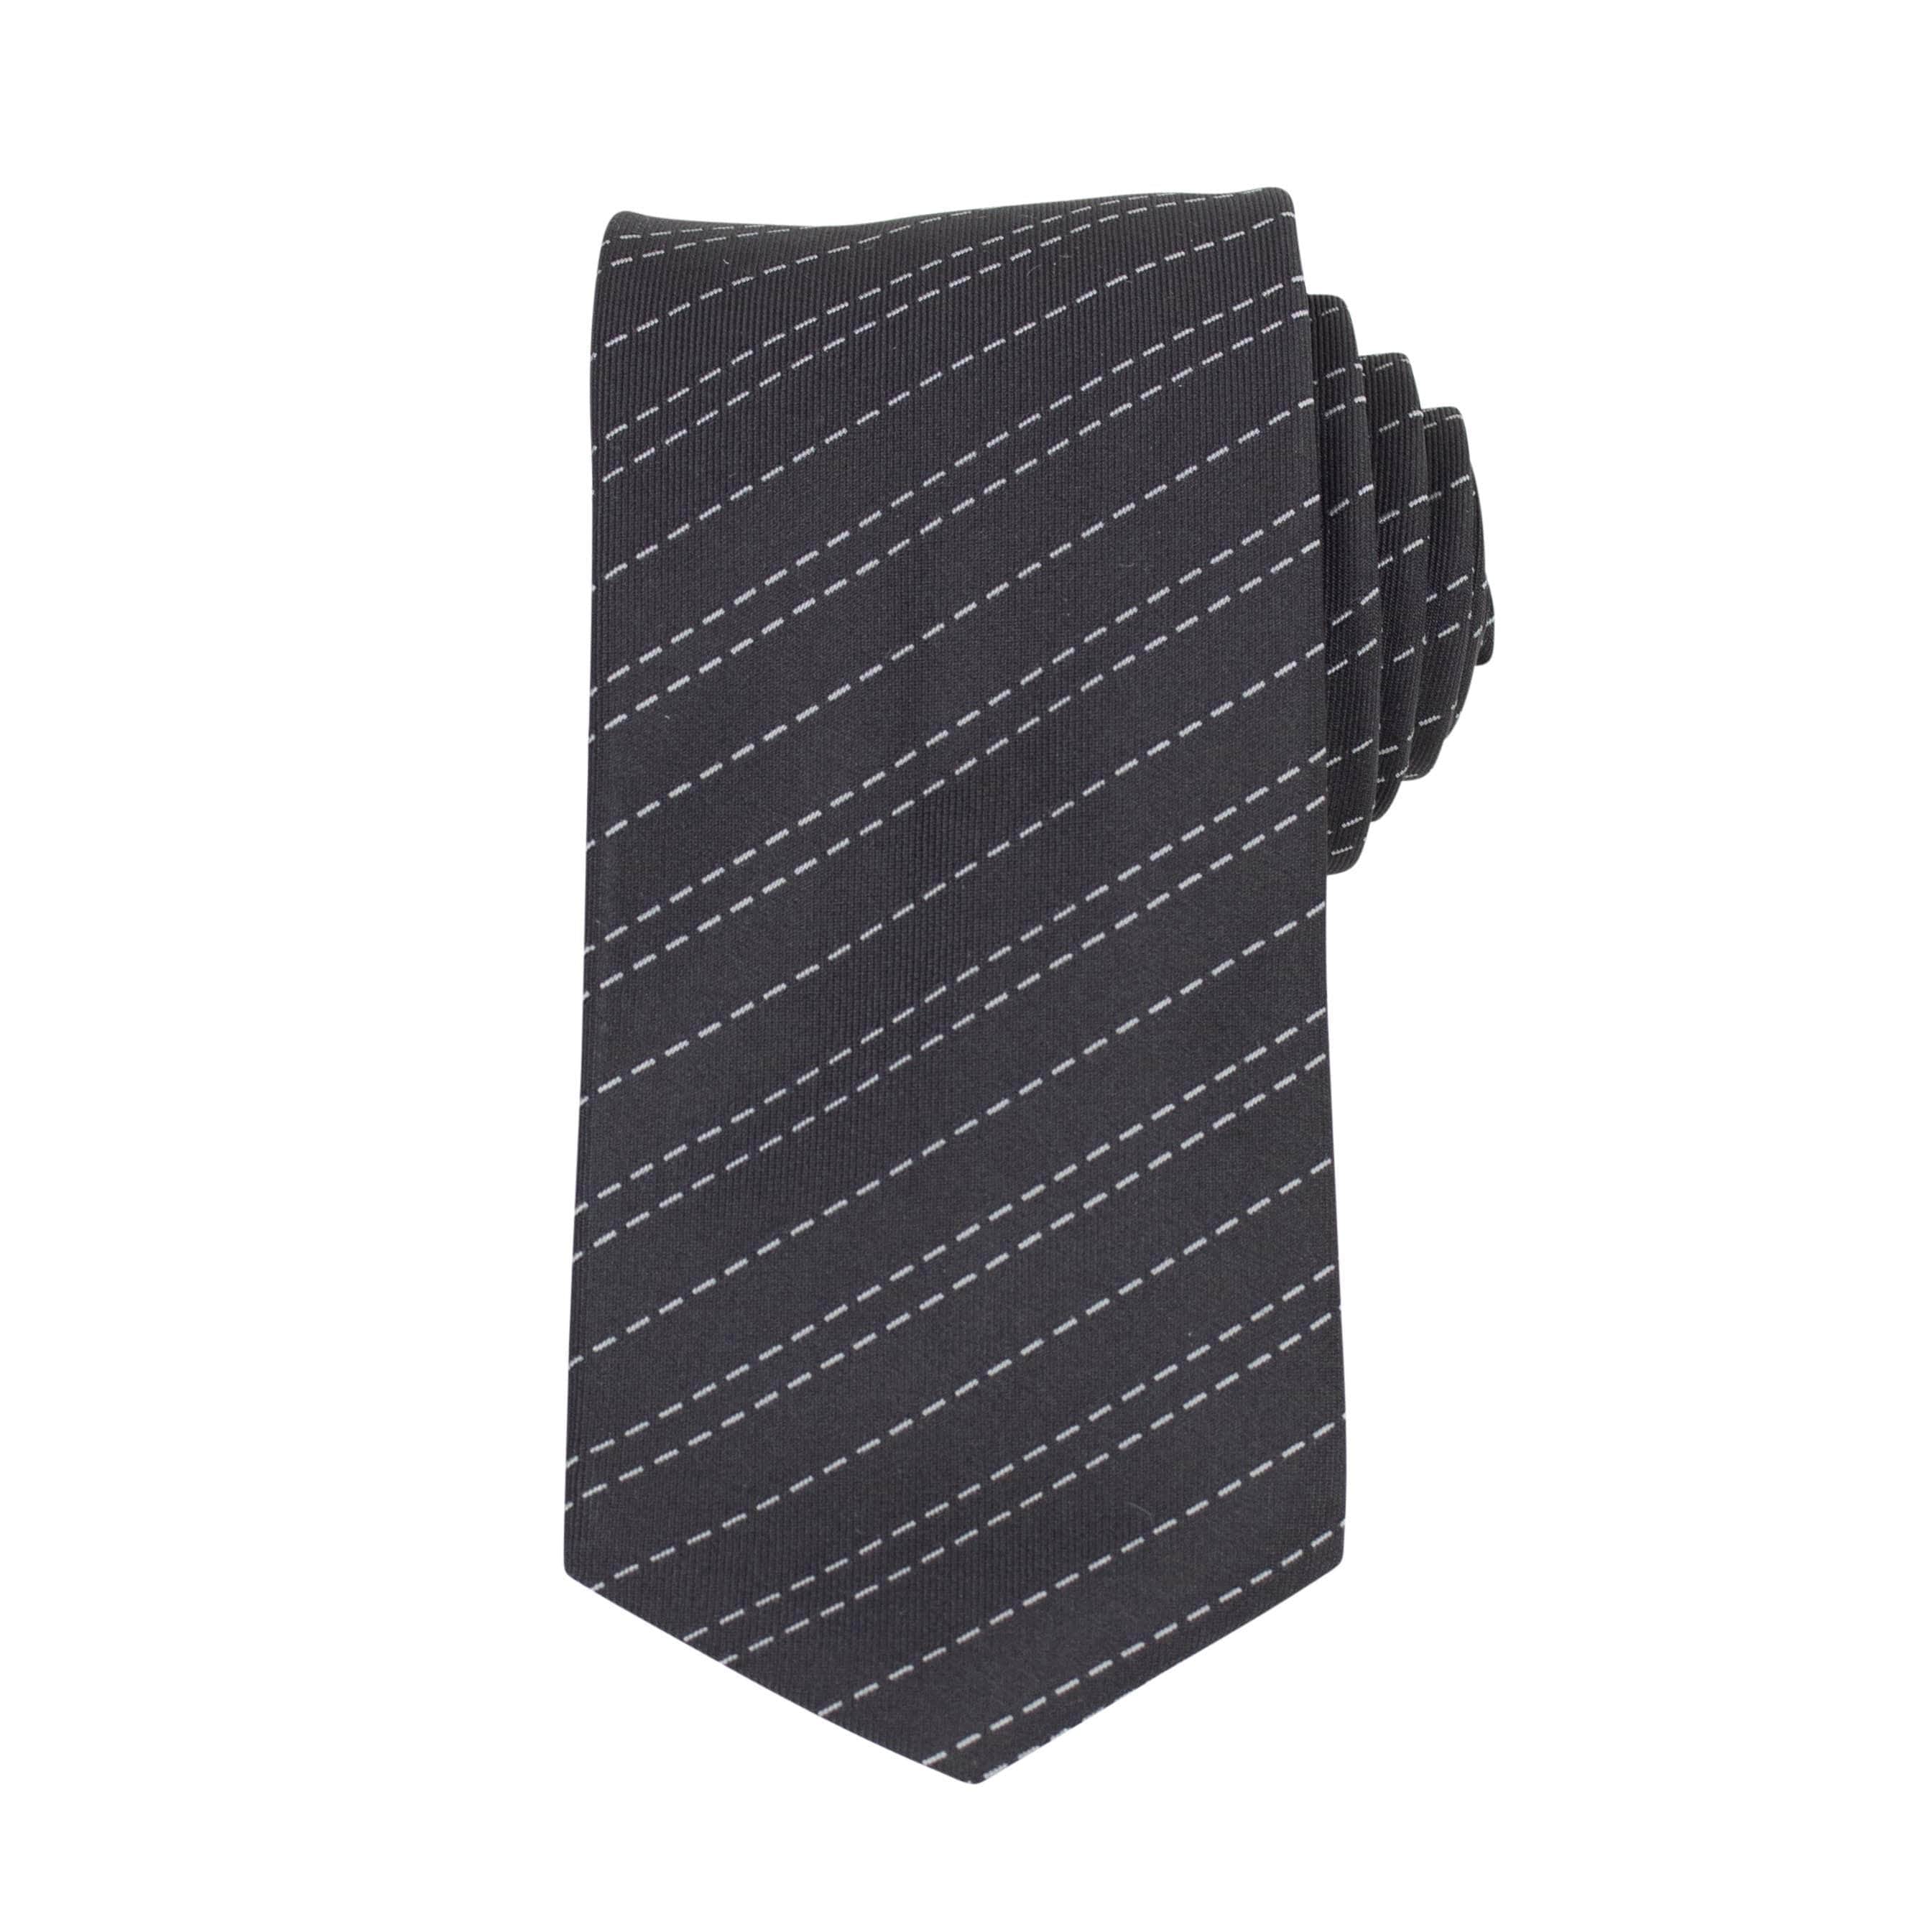 John Lobb Ties Silk Striped Neck Tie - Black 54LE-1503 54LE-1503